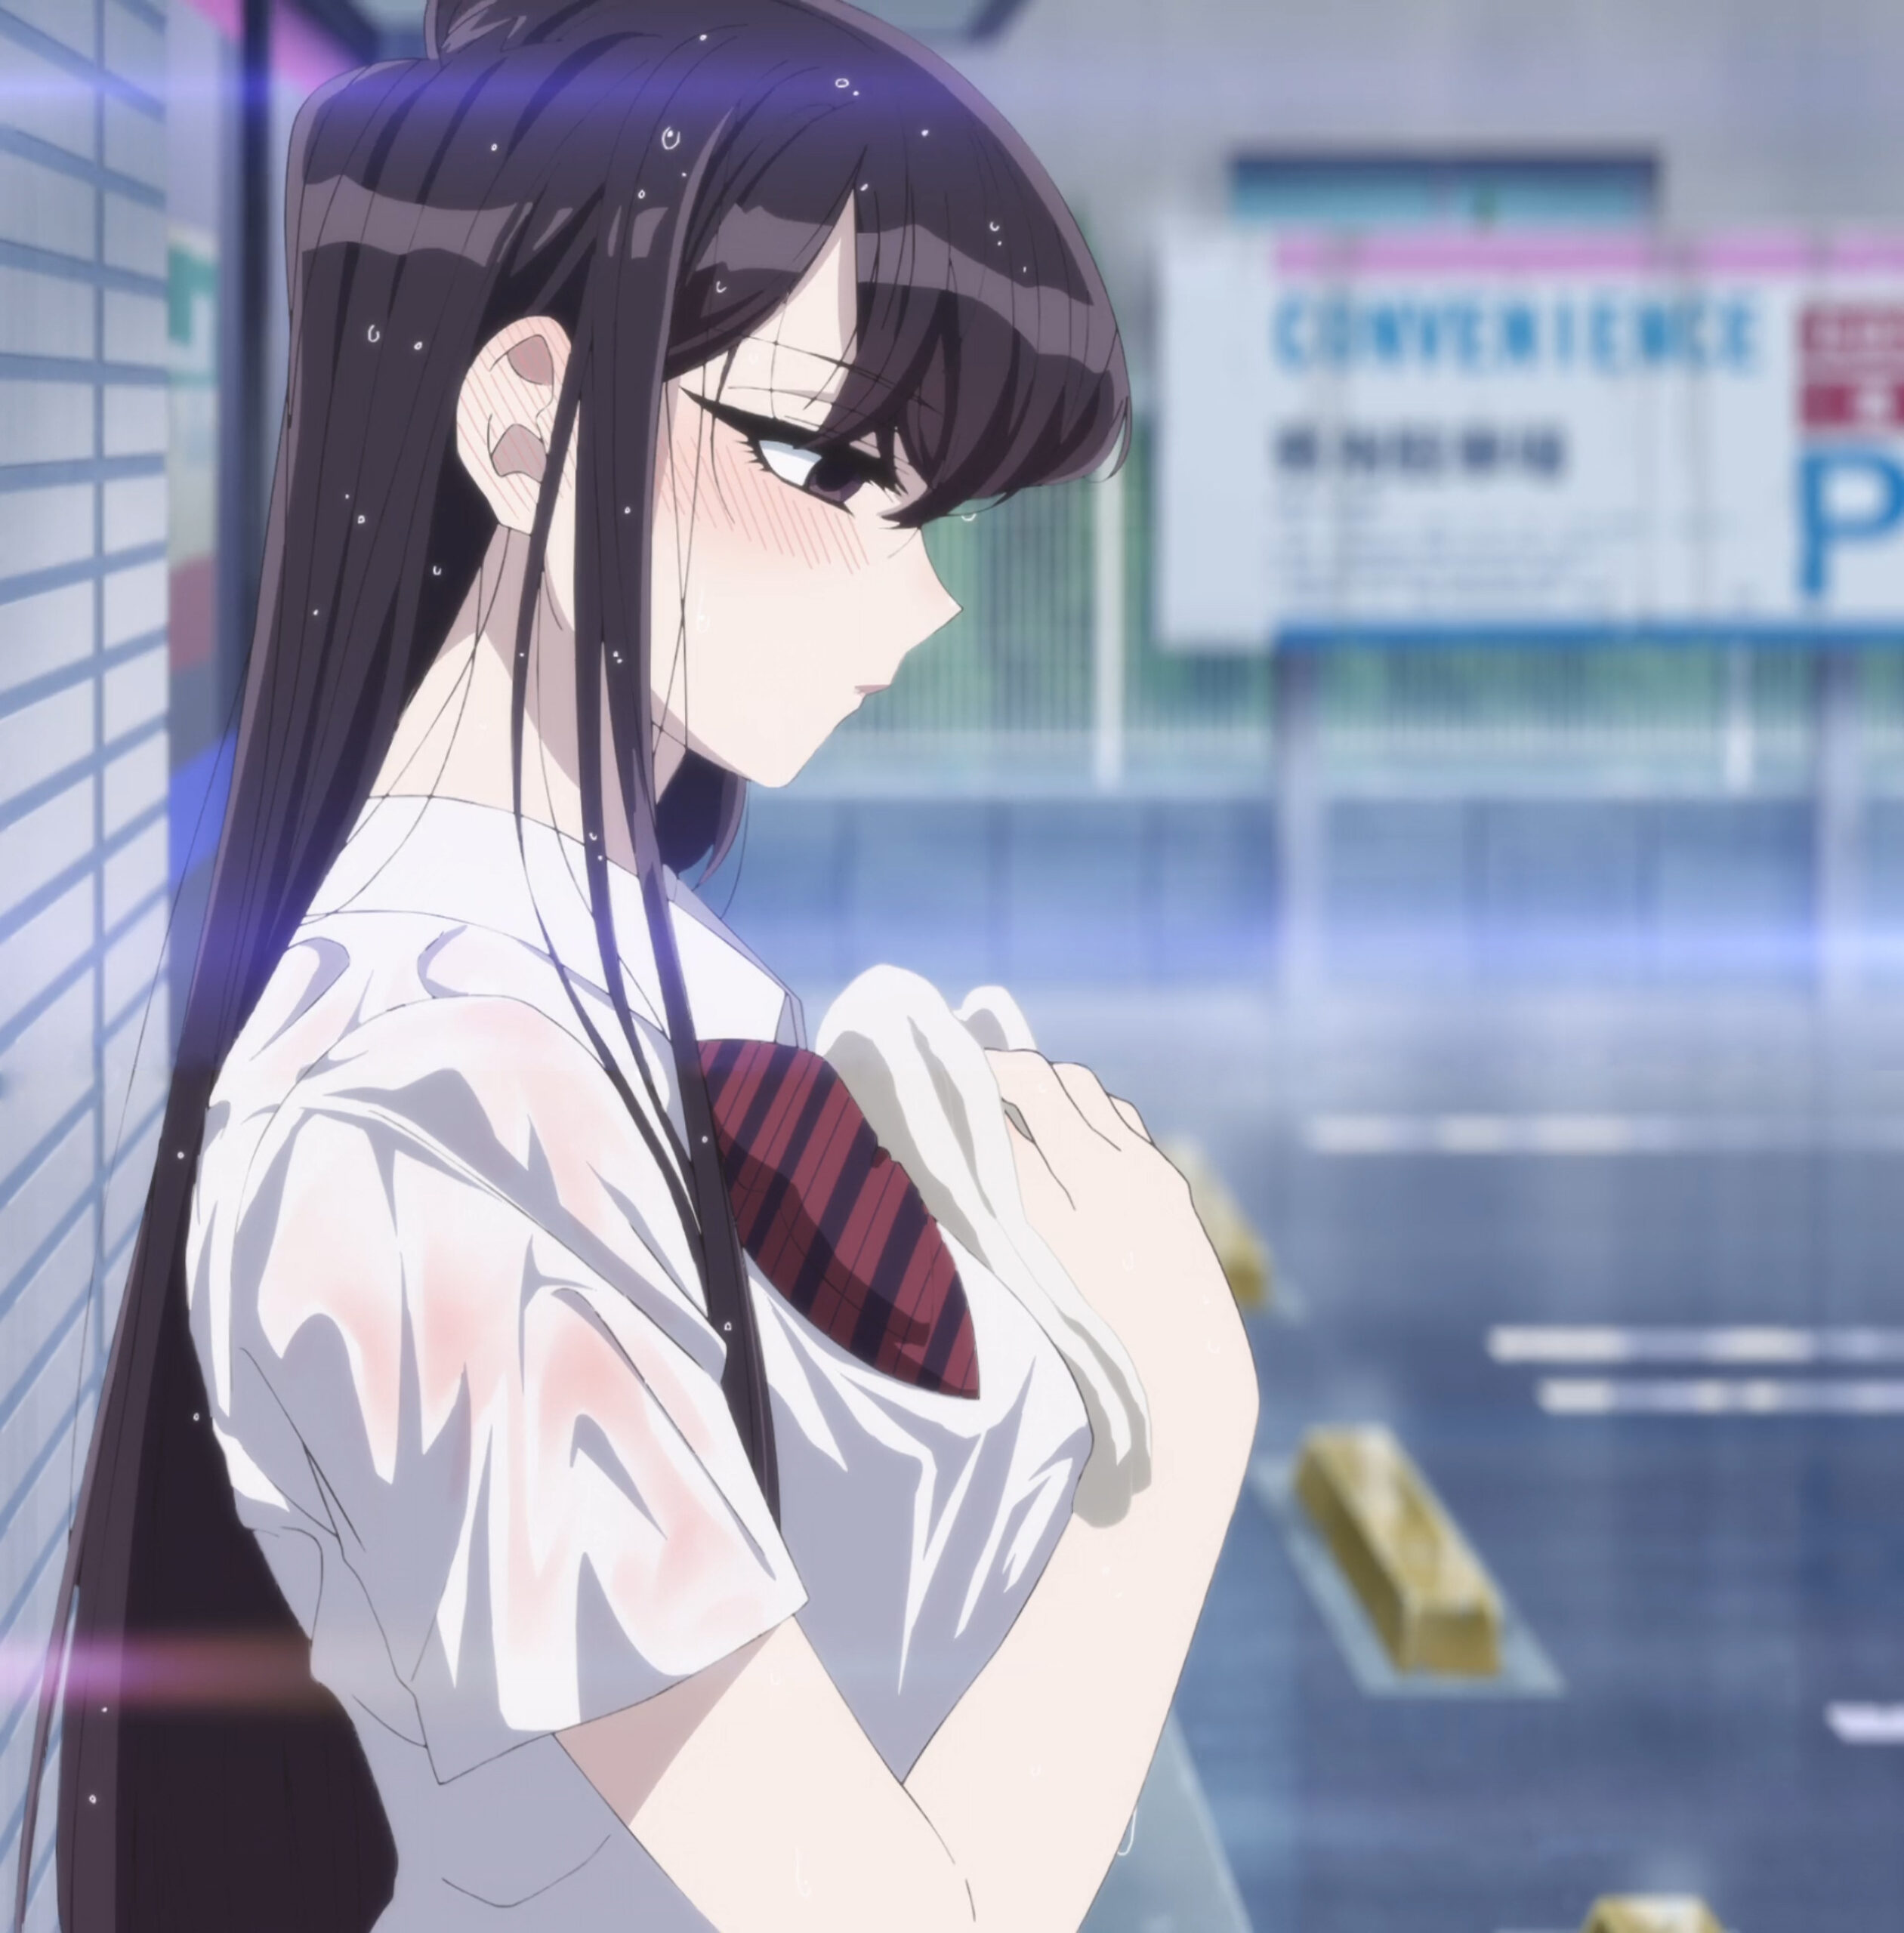 Review Anime Komi-san Wa Comyushou Desu, Biasa Aja Atau Bagus? - Area Topik